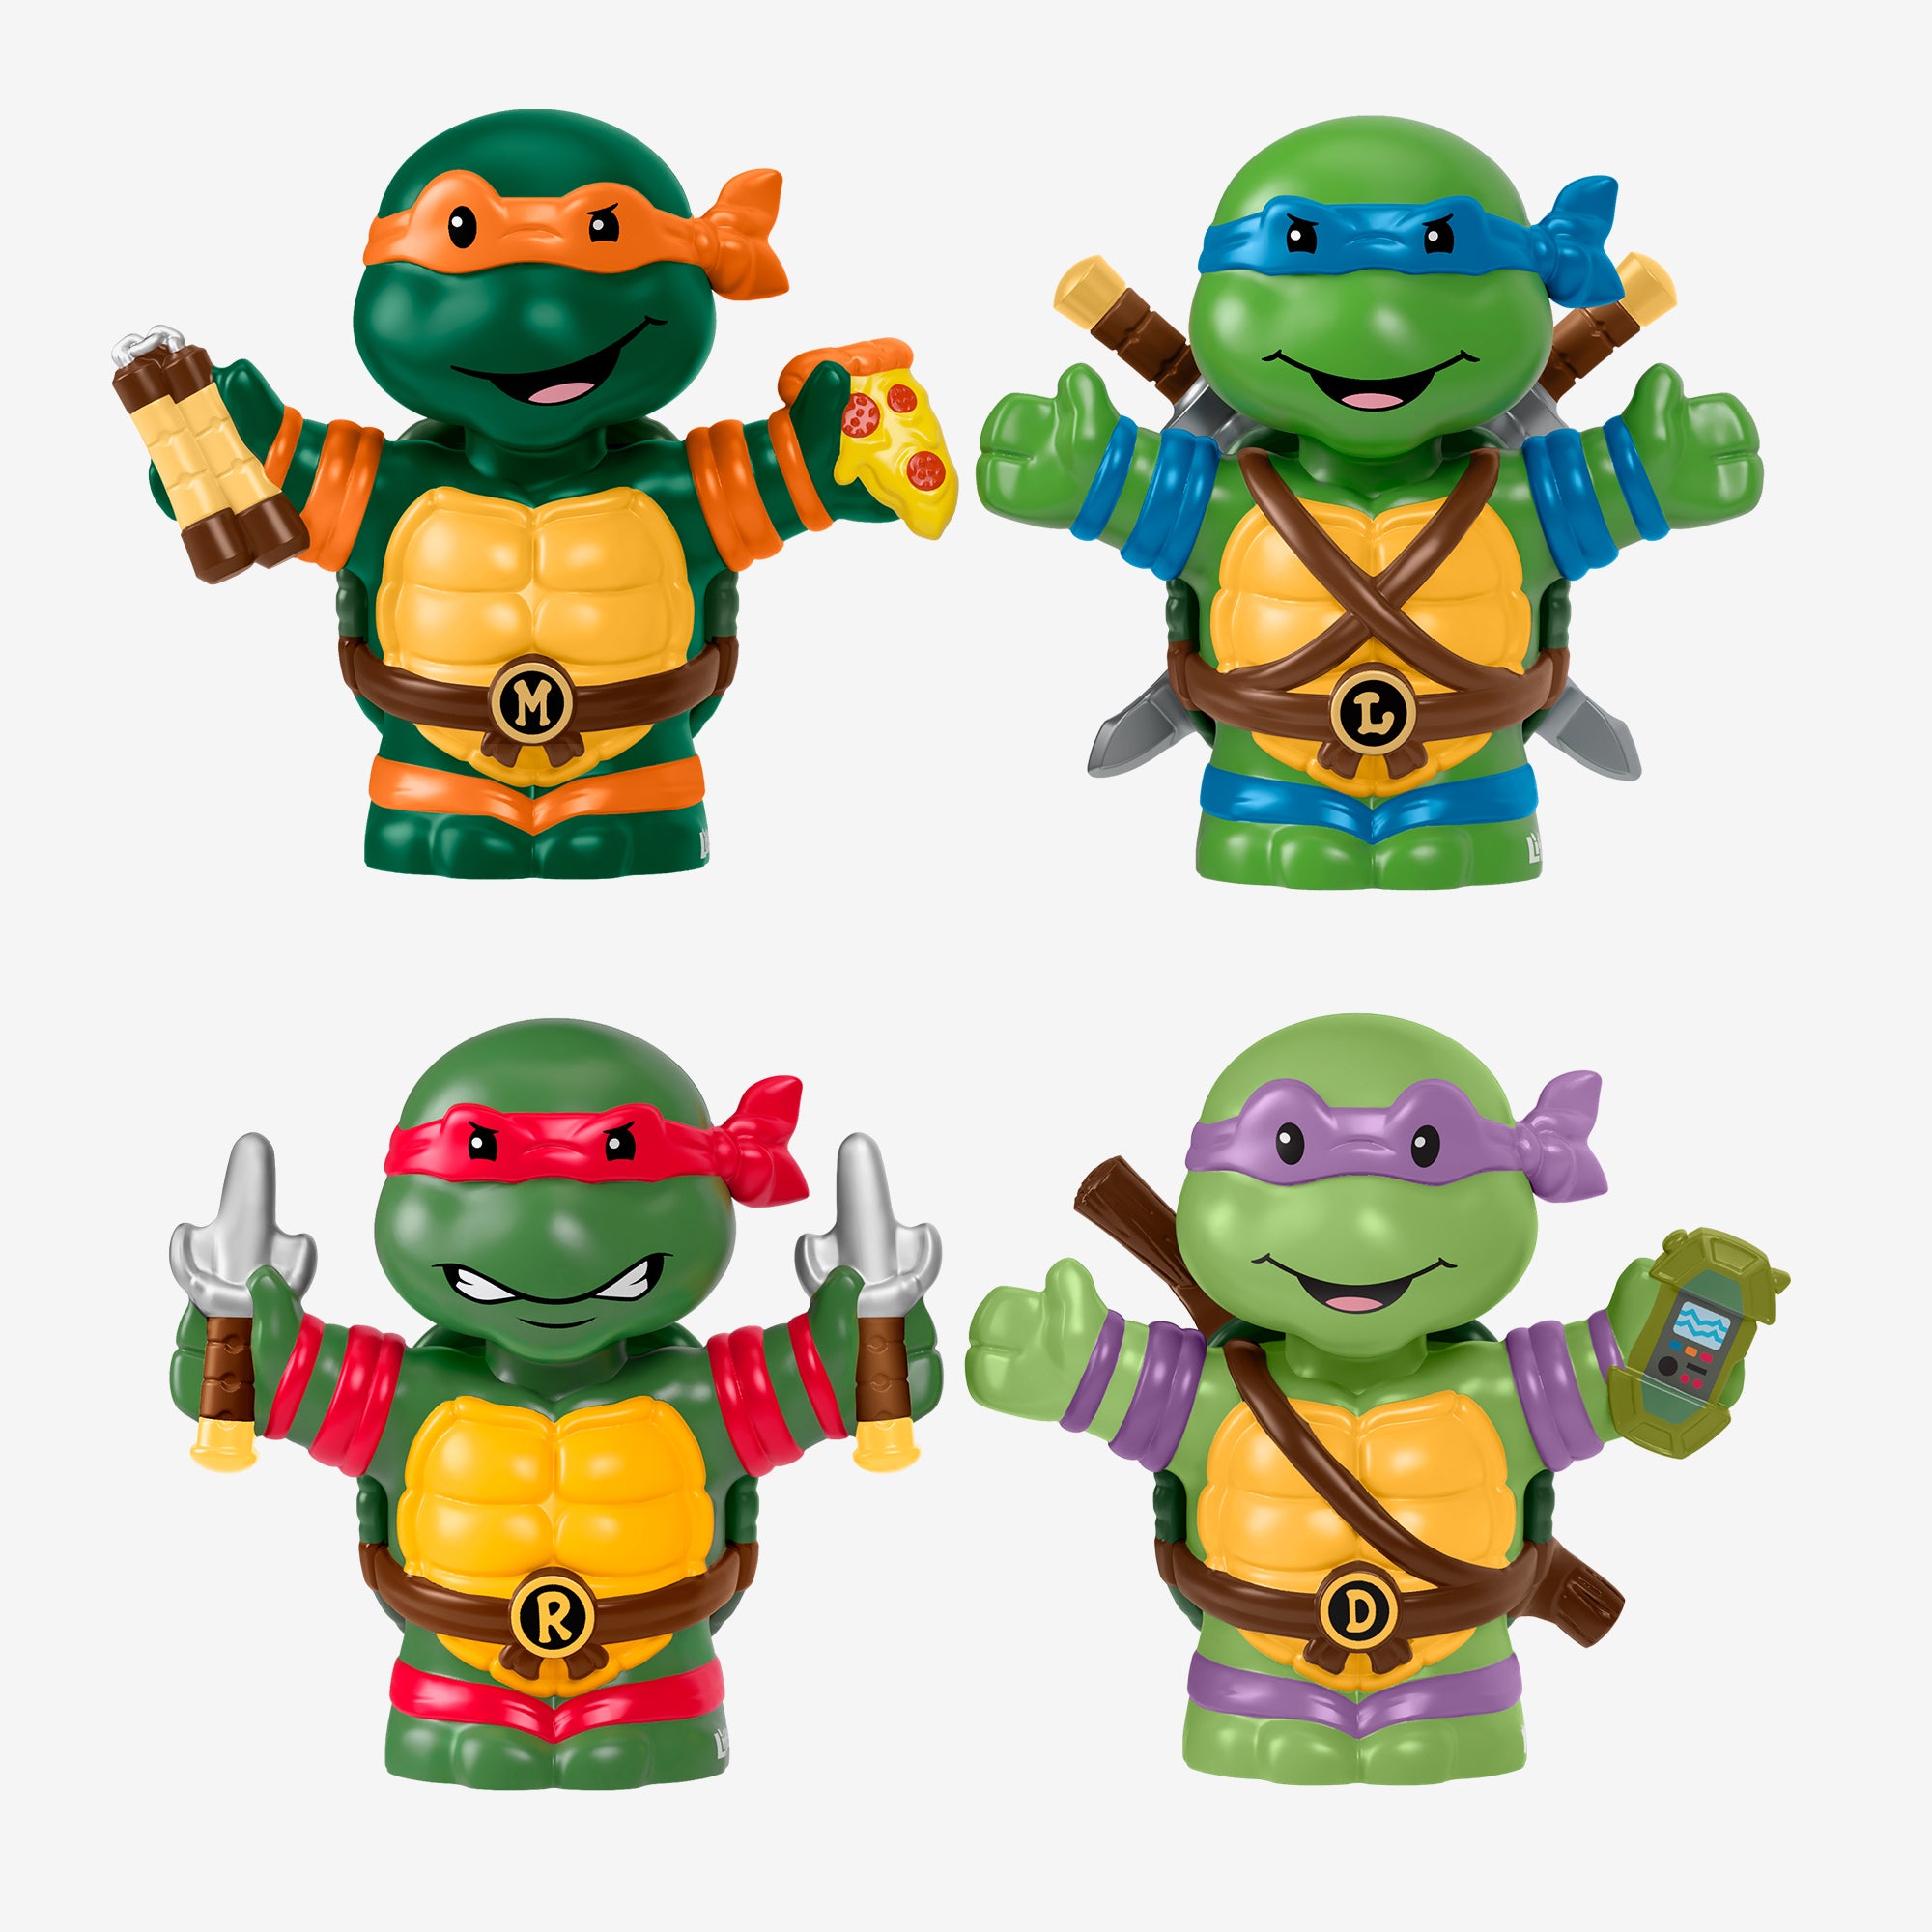 Little People Collector Teenage Mutant Ninja Turtles Special Edition S –  Mattel Creations